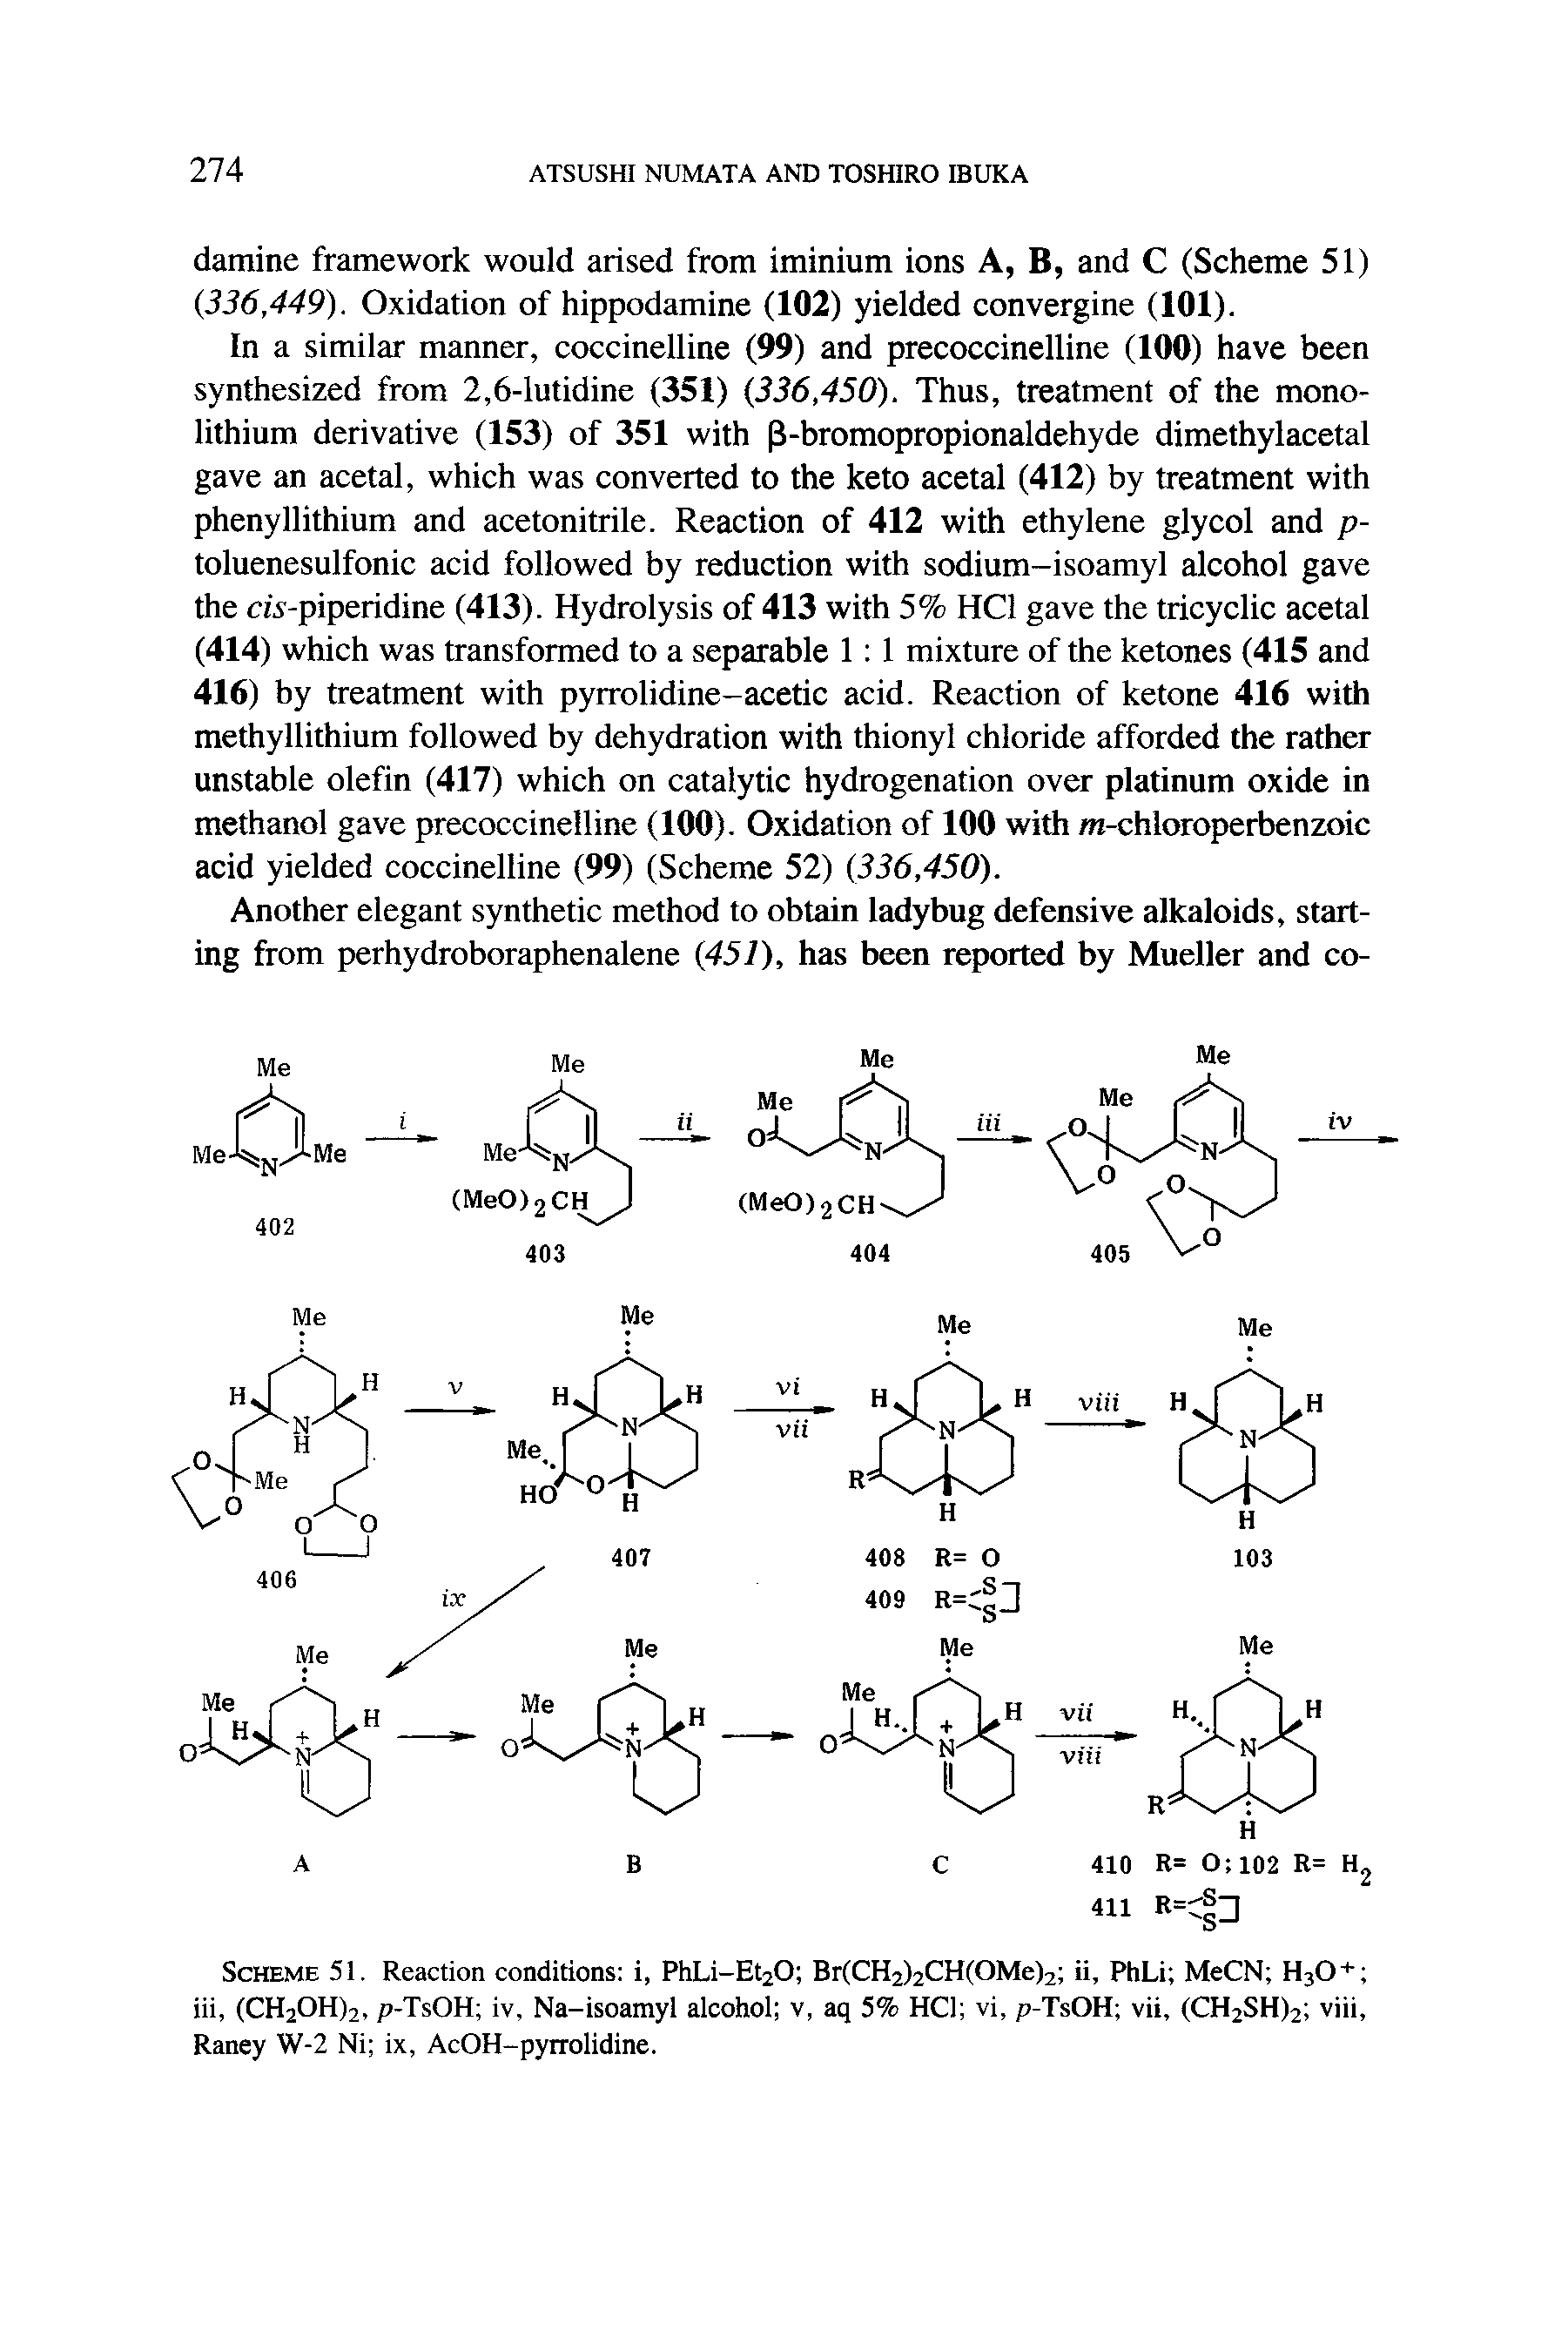 Scheme 51. Reaction conditions i, PhLi-Et20 Br(CH2)2CH(OMe)2 ii, PhLi MeCN H3O + iii, (CH20H)2, p-TsOH iv, Na-isoamyl alcohol v, aq 5% HCl vi, p-TsOH vii, (CH2SH)2 viii, Raney W-2 Ni ix, AcOH-pyrrolidine.